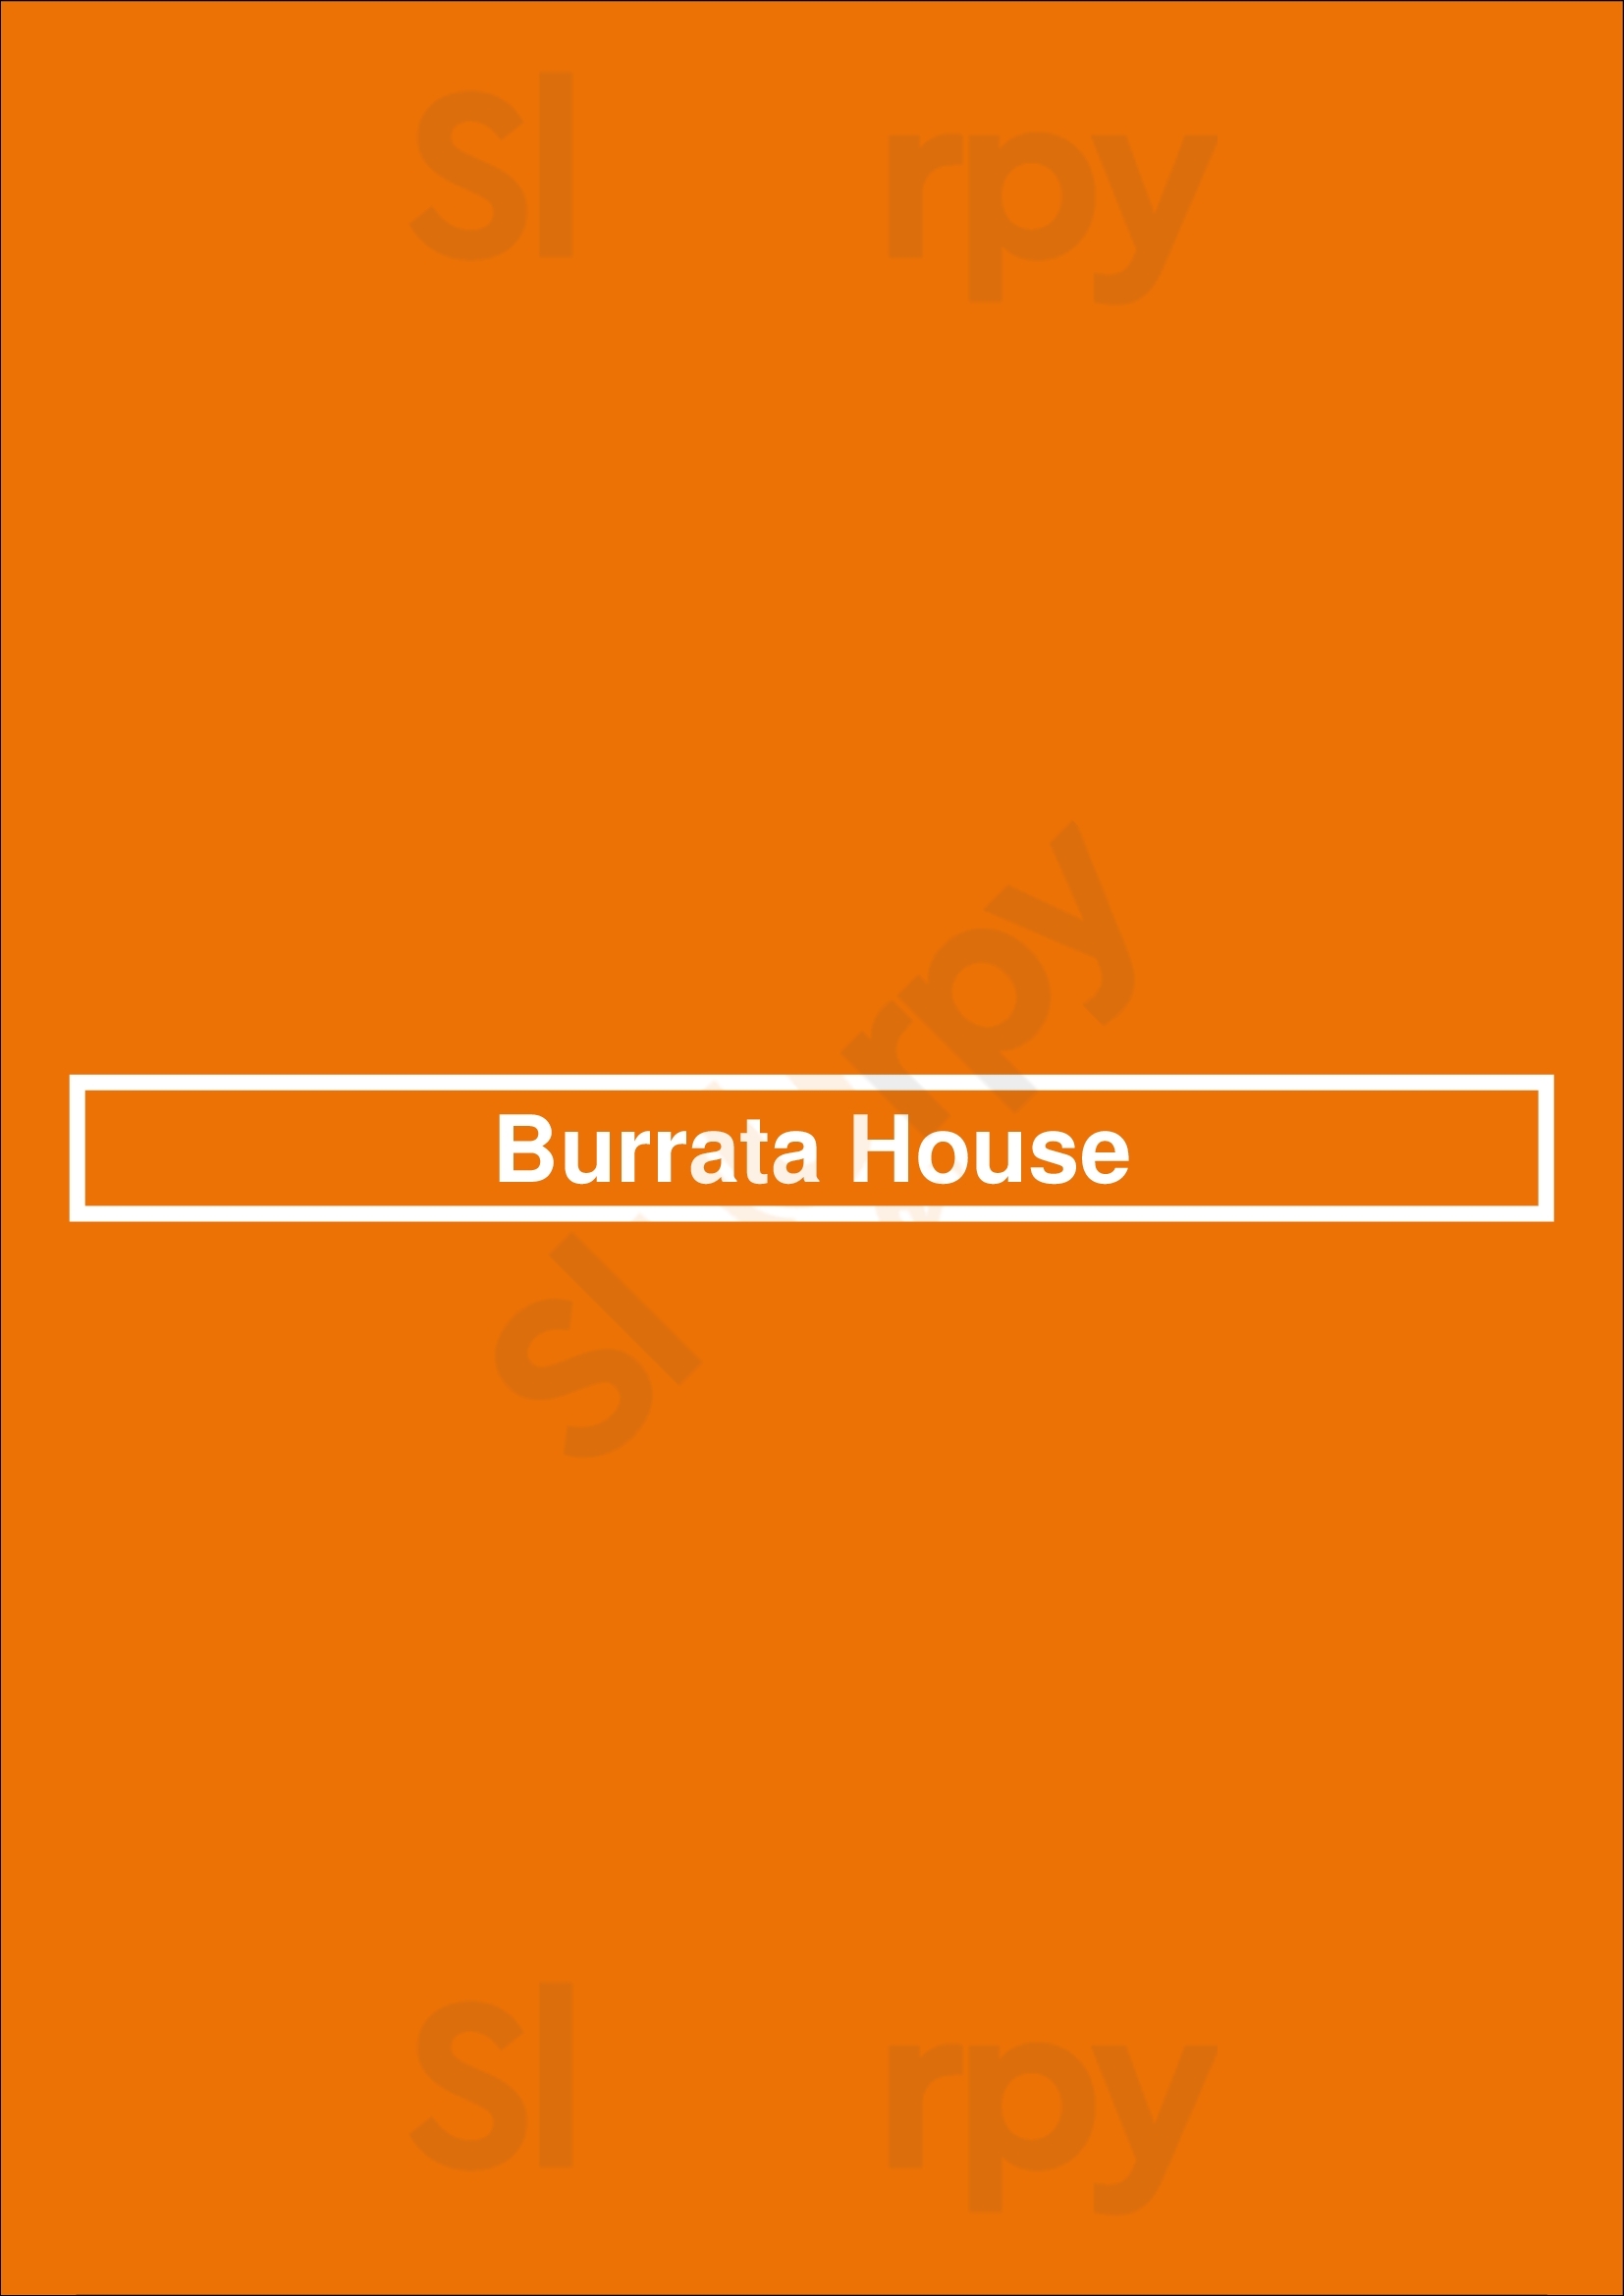 Burrata House Los Angeles Menu - 1